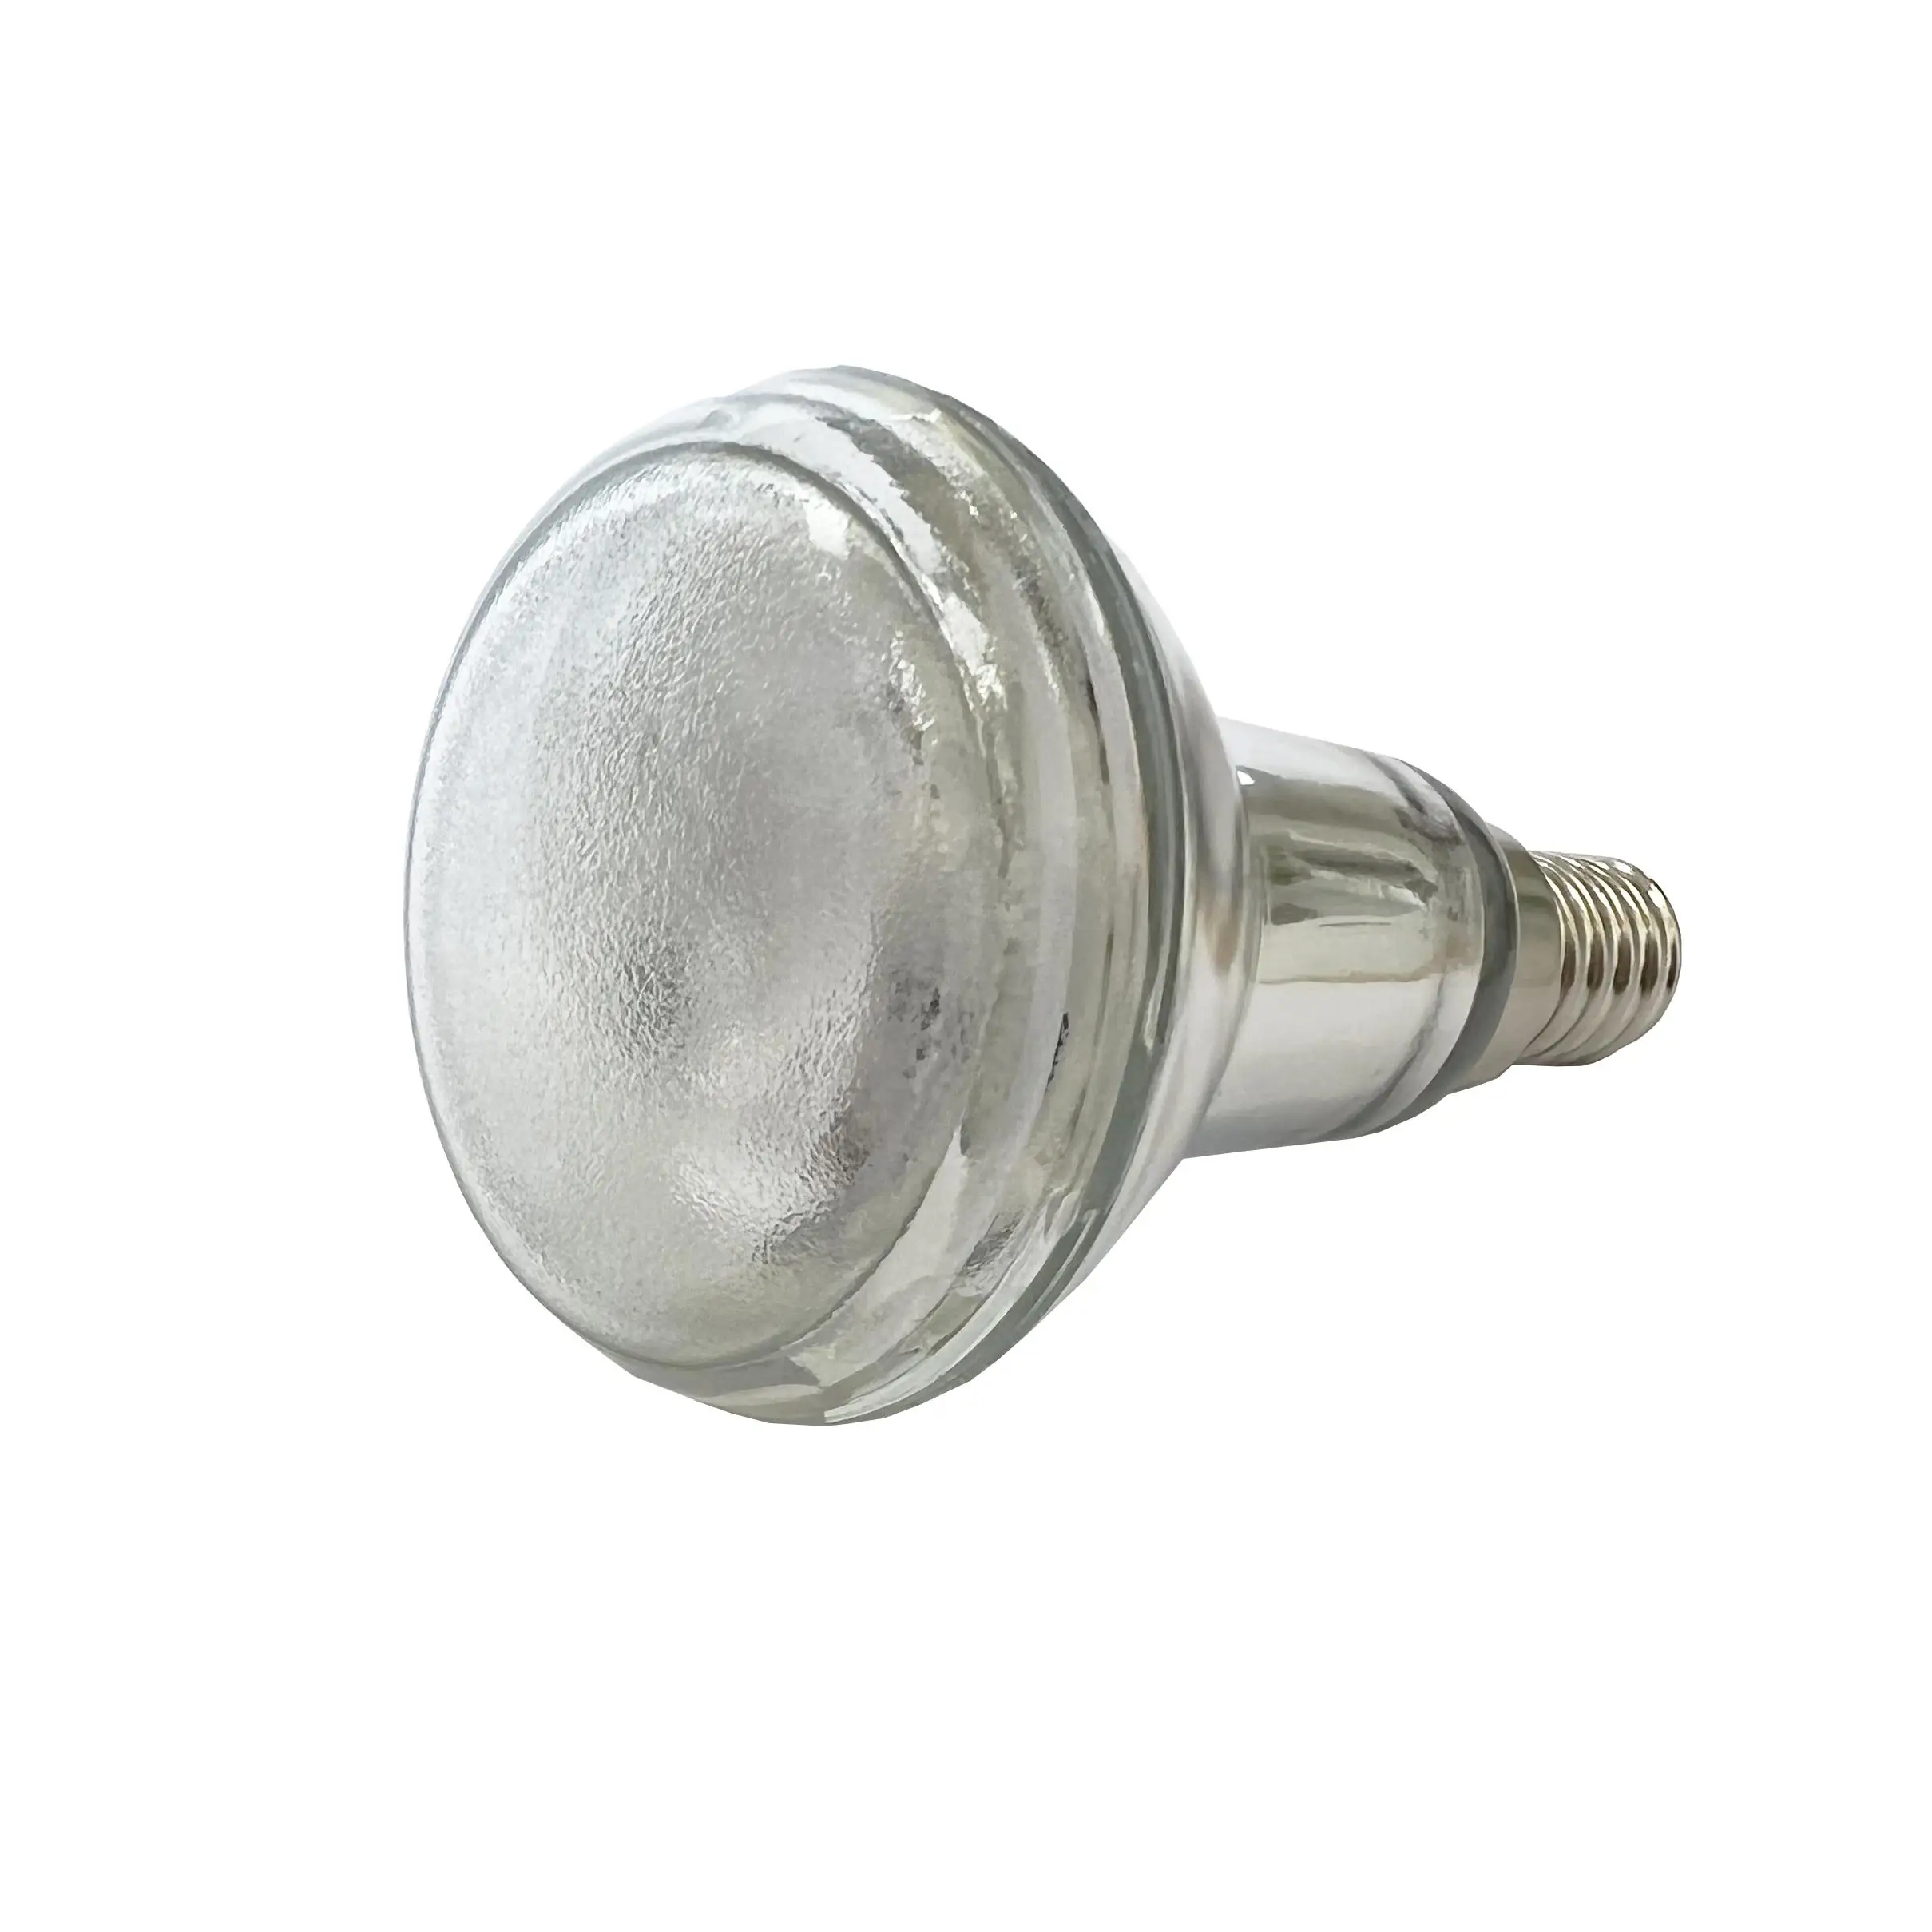 Lamp Accessories Best Selling Led Light Bulb R50&r63e27/e26/e14 4.5w 450lm For Living Room,Coffee - Buy R63 Led Bulb,R50 Led Bulb,G40 Led Light Bulb Product on Alibaba.com